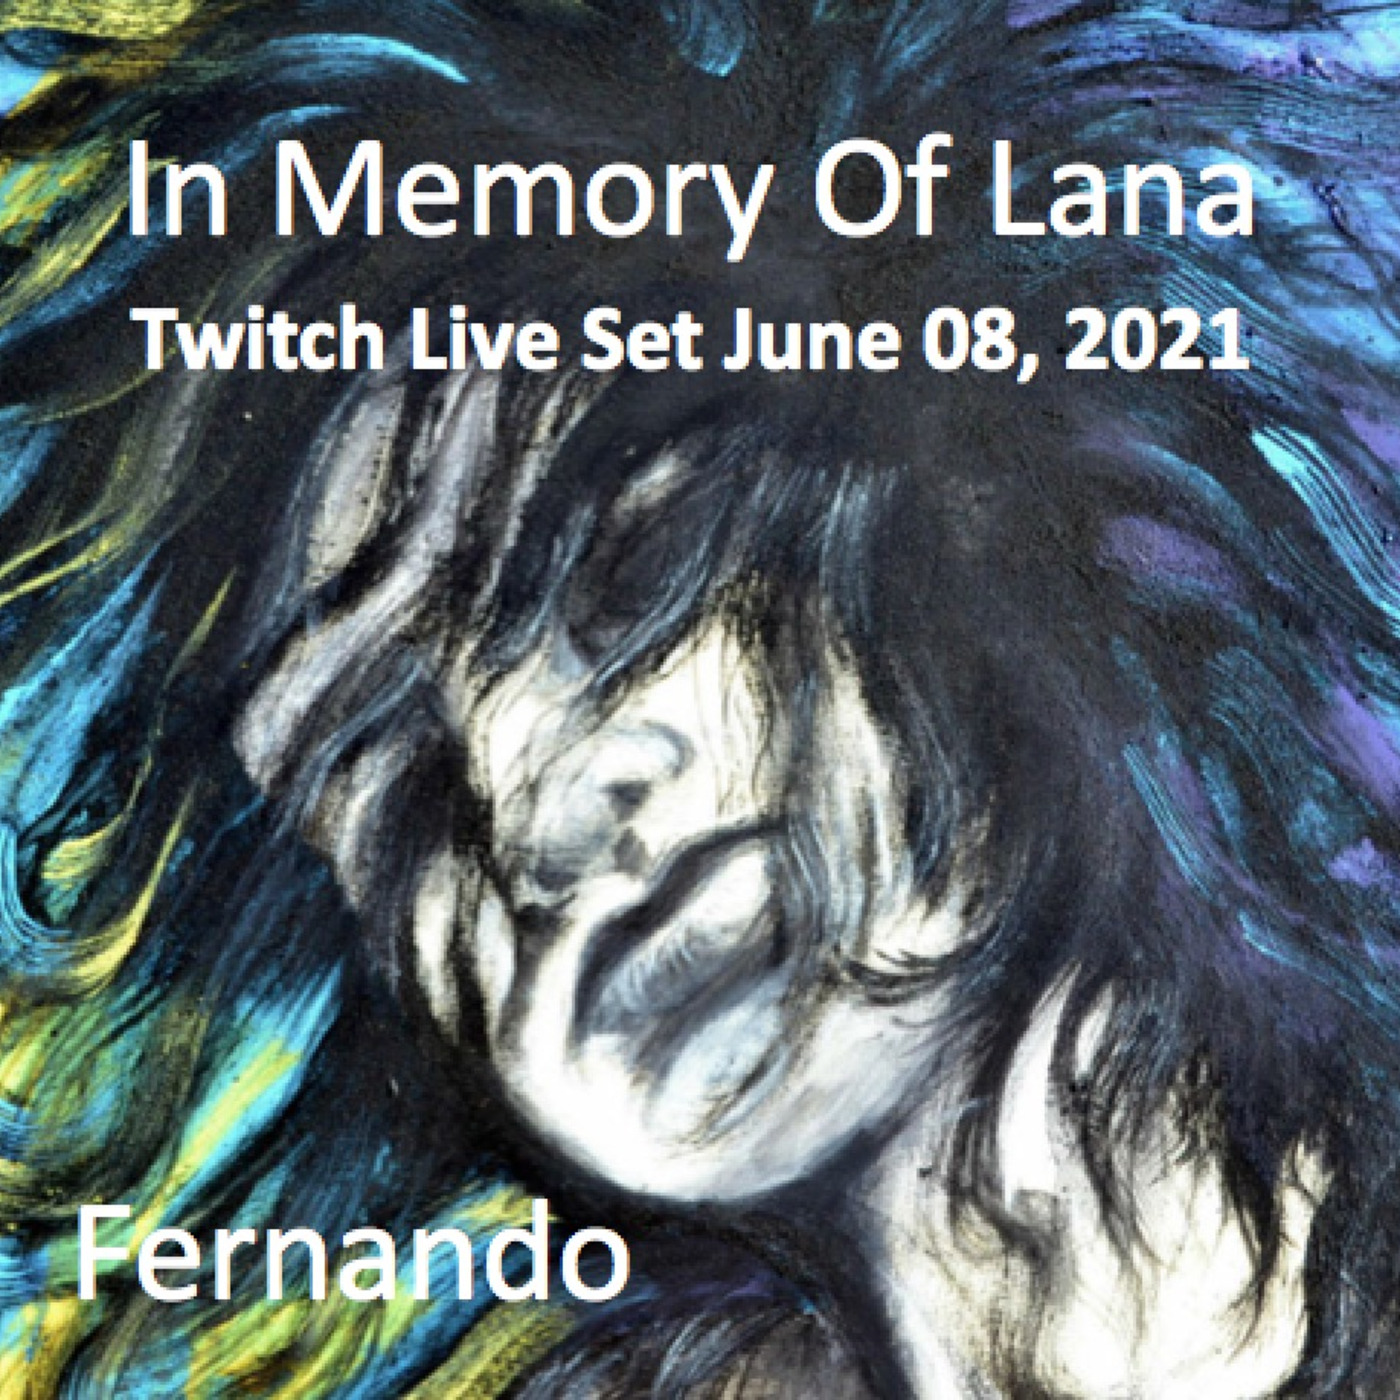 Episode 64: Fernando - In Memory of Lana - Twitch Live Set, June 08 2021